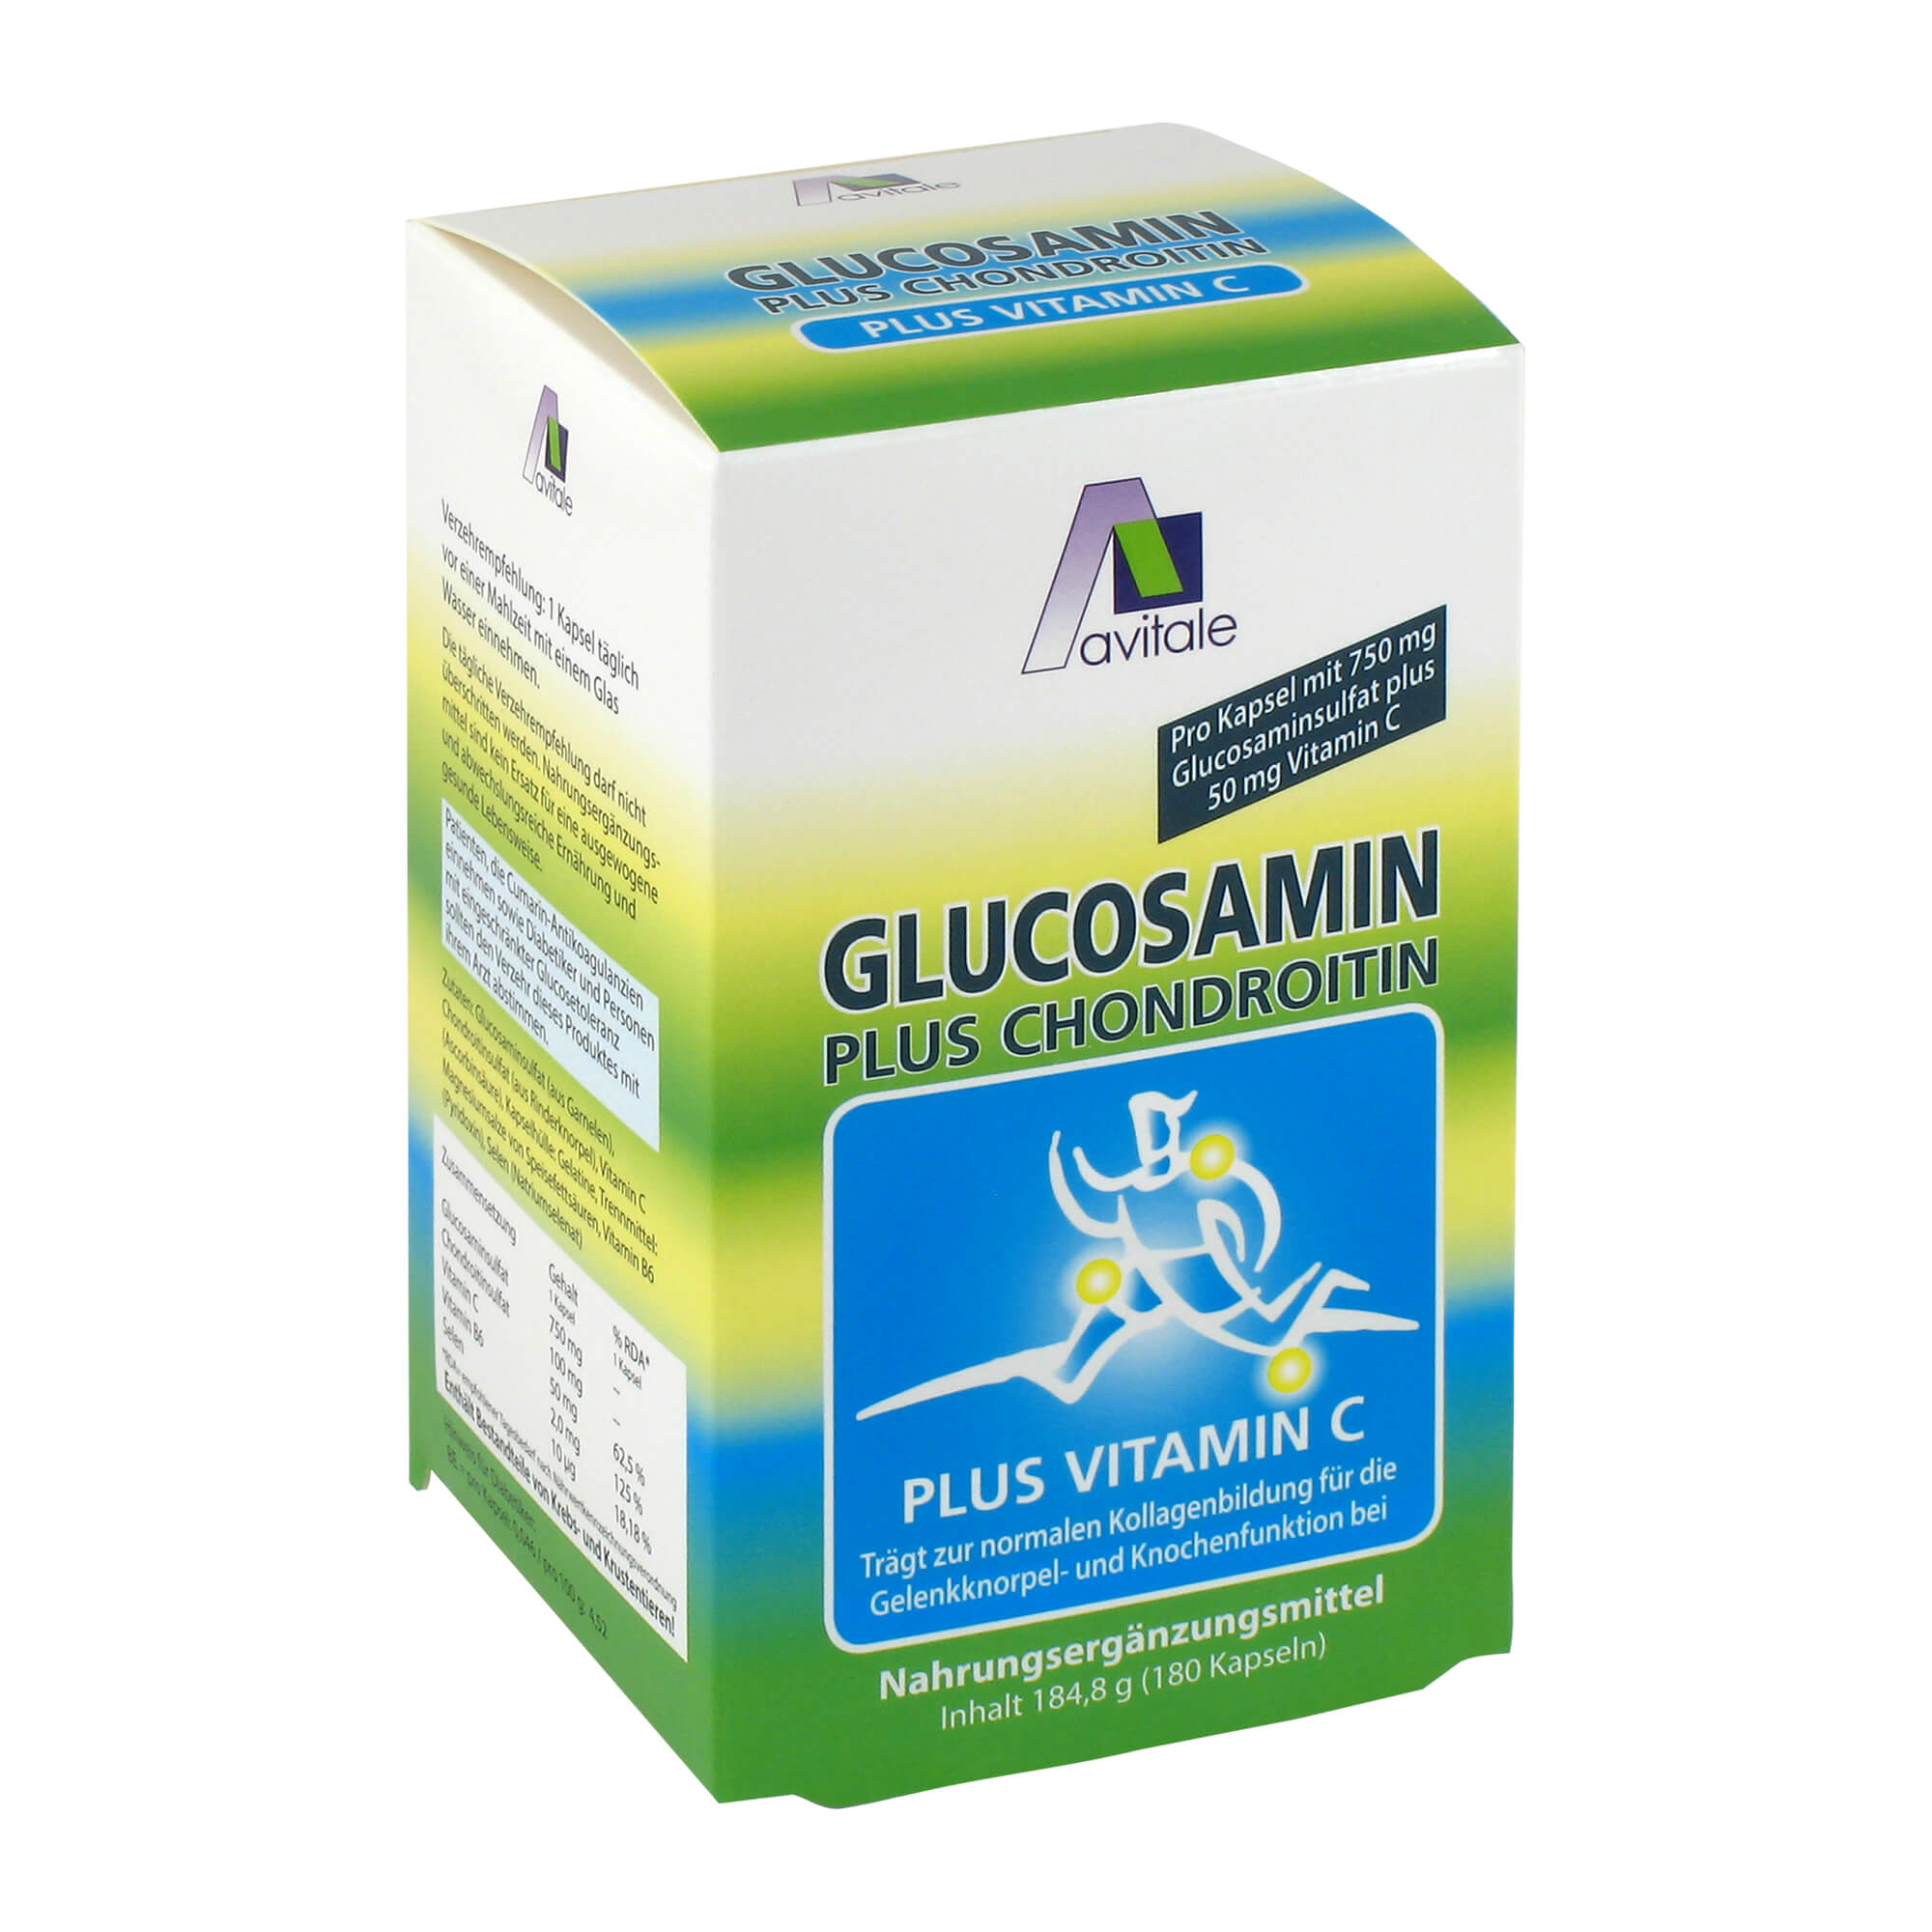 Nahrungsergänzungsmittel mit 750 mg Glucosaminsulfat und 100 mg Chondroitinsulfat.